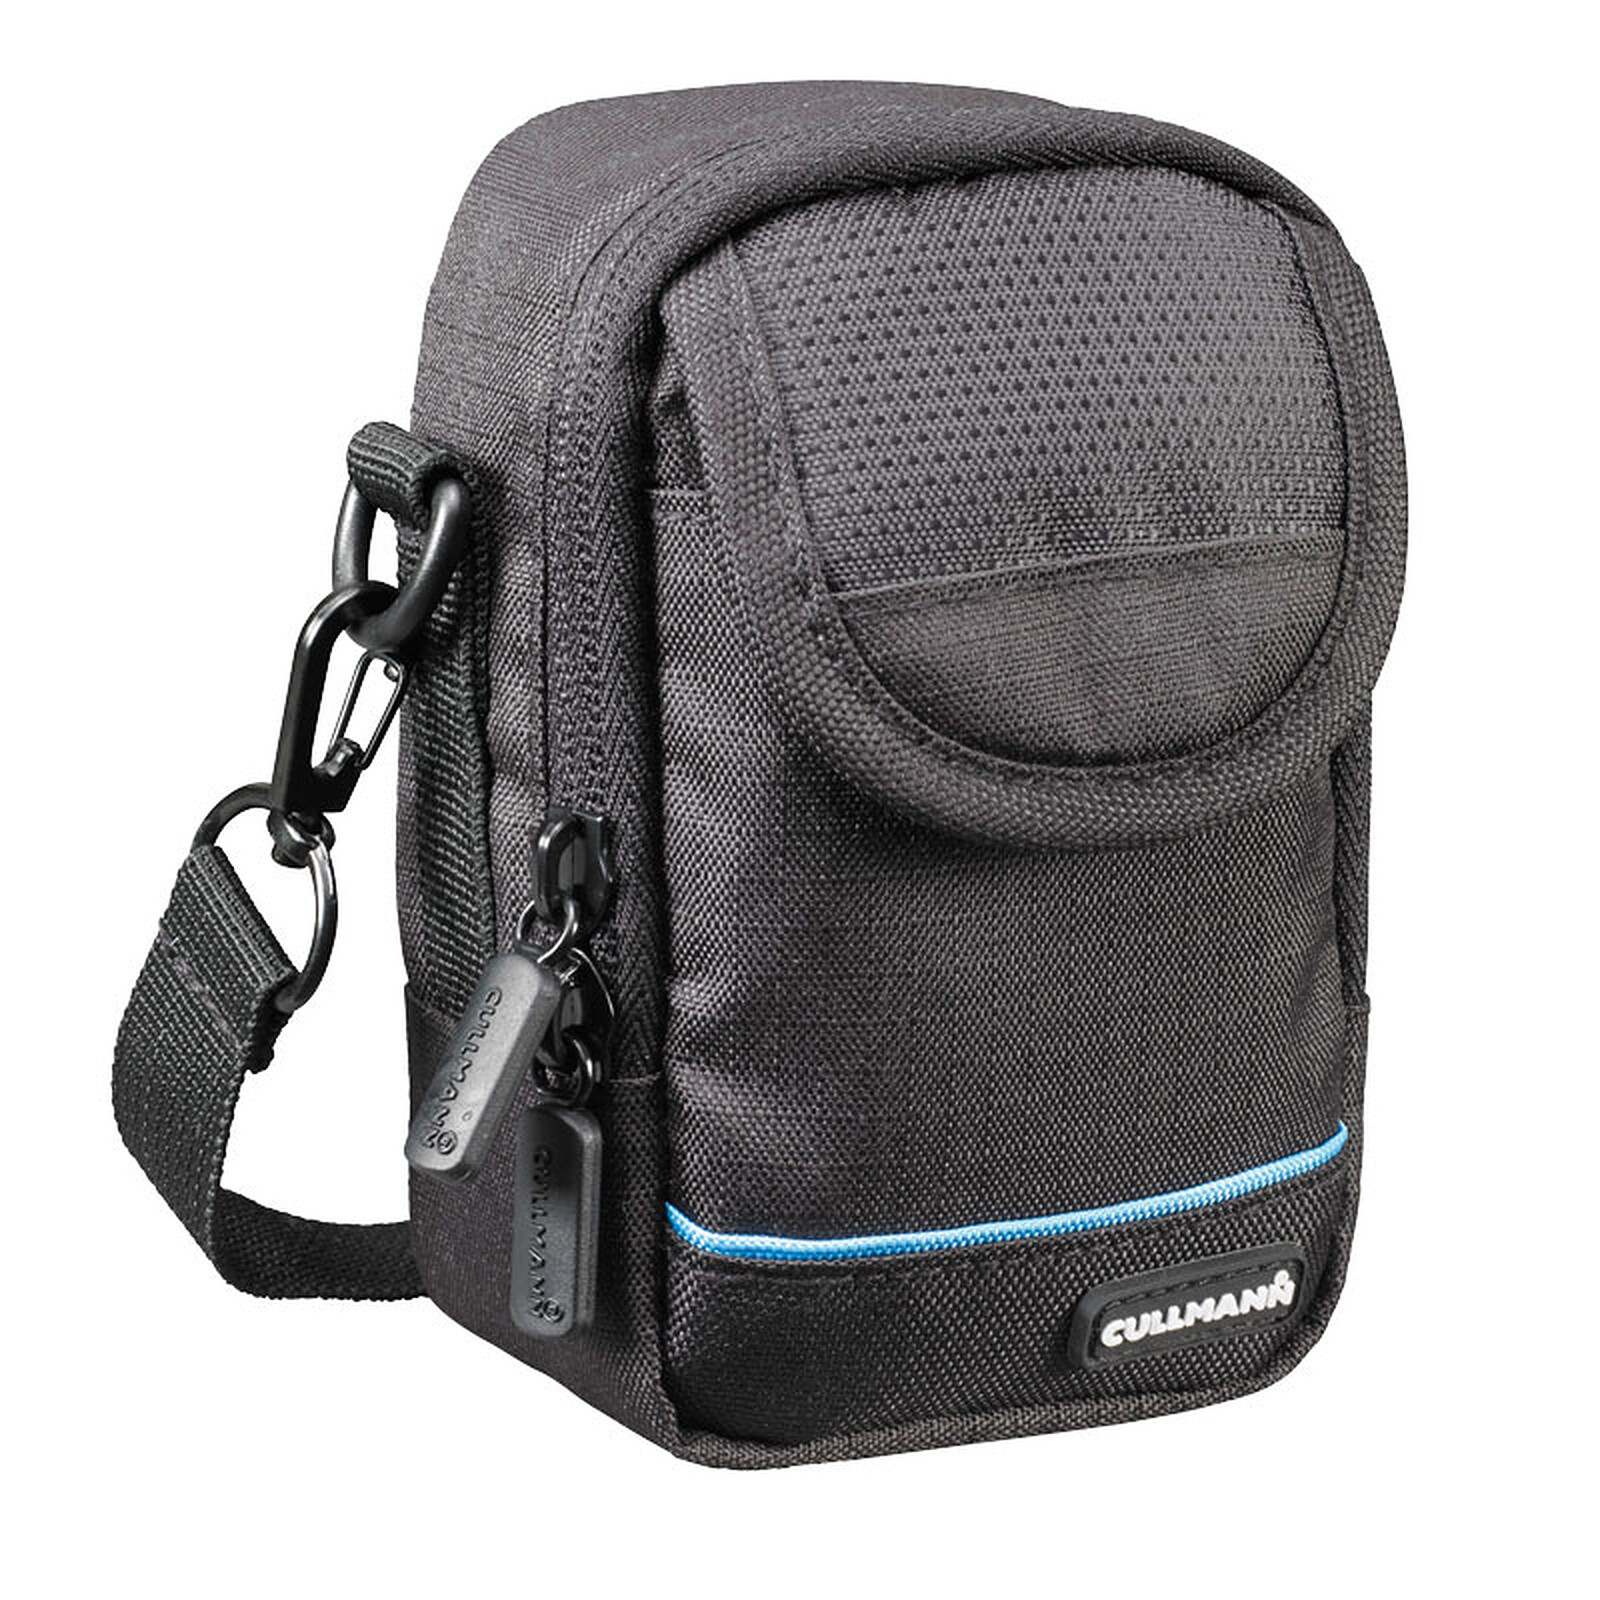 Cullmann Ultralight pro Compact 400 - Camera bag & case - LDLC 3-year ...